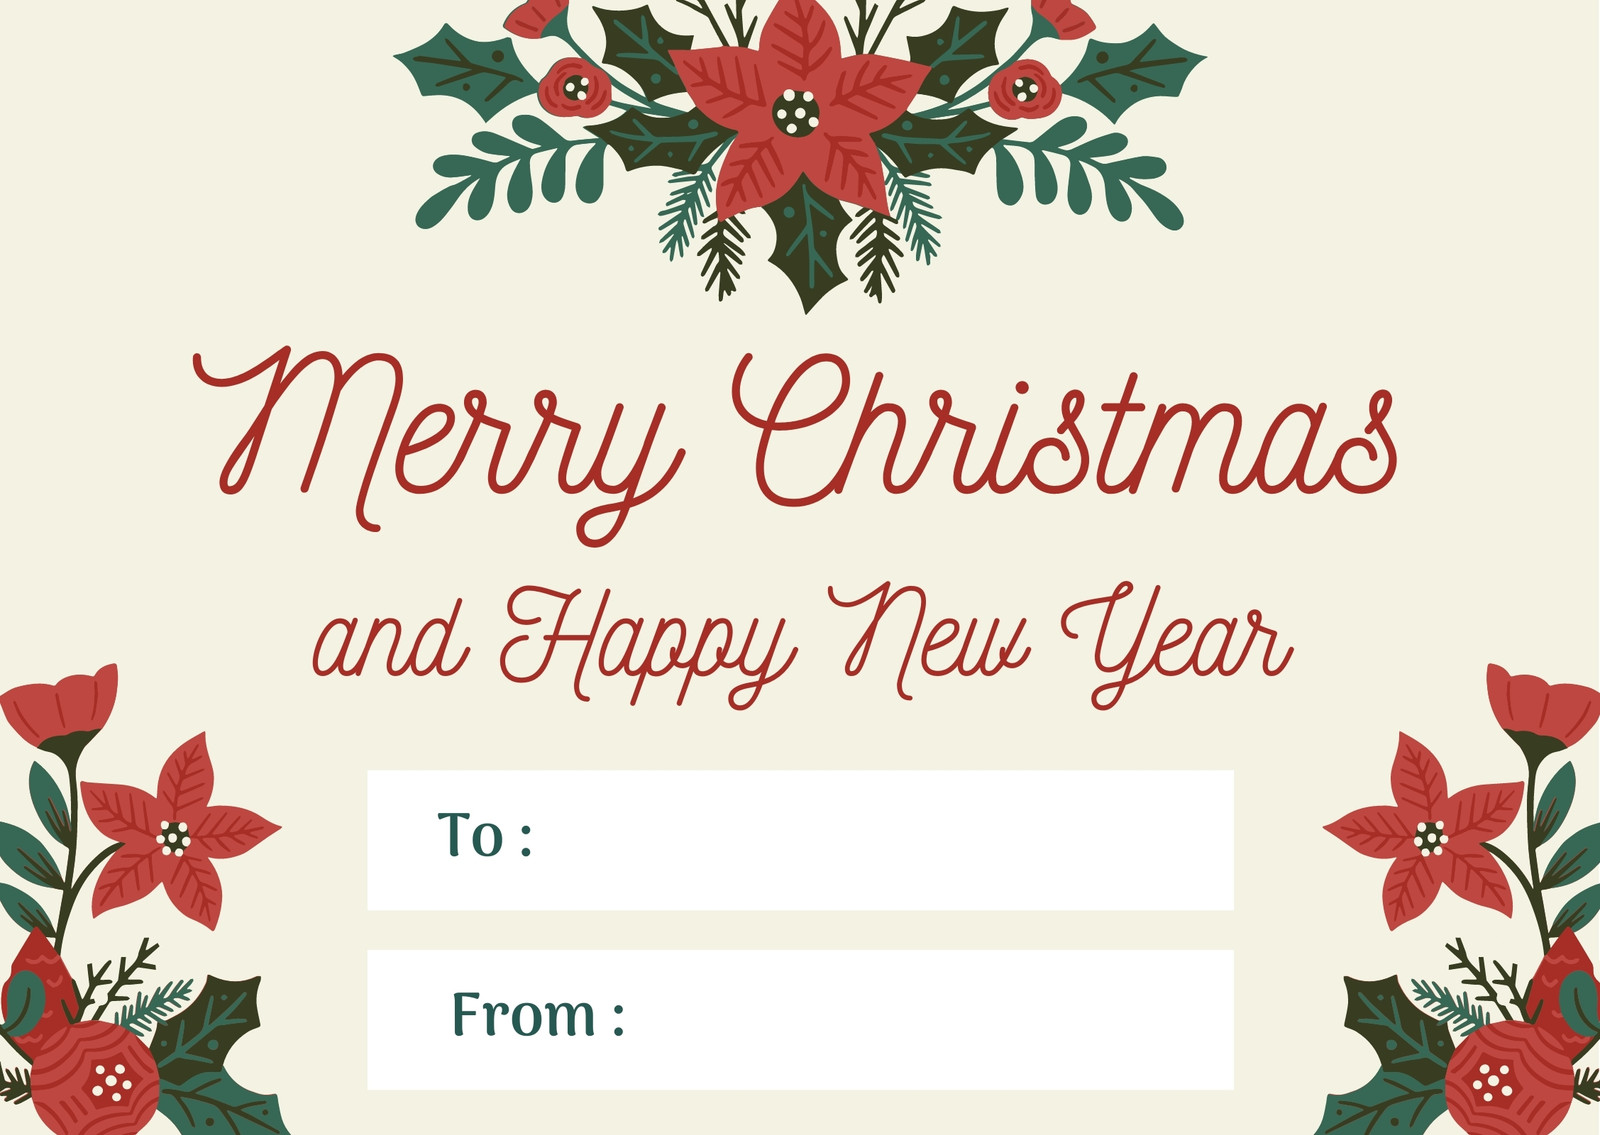 Blank Note & Address Organizer Album Greeting Card Christmas Gift 